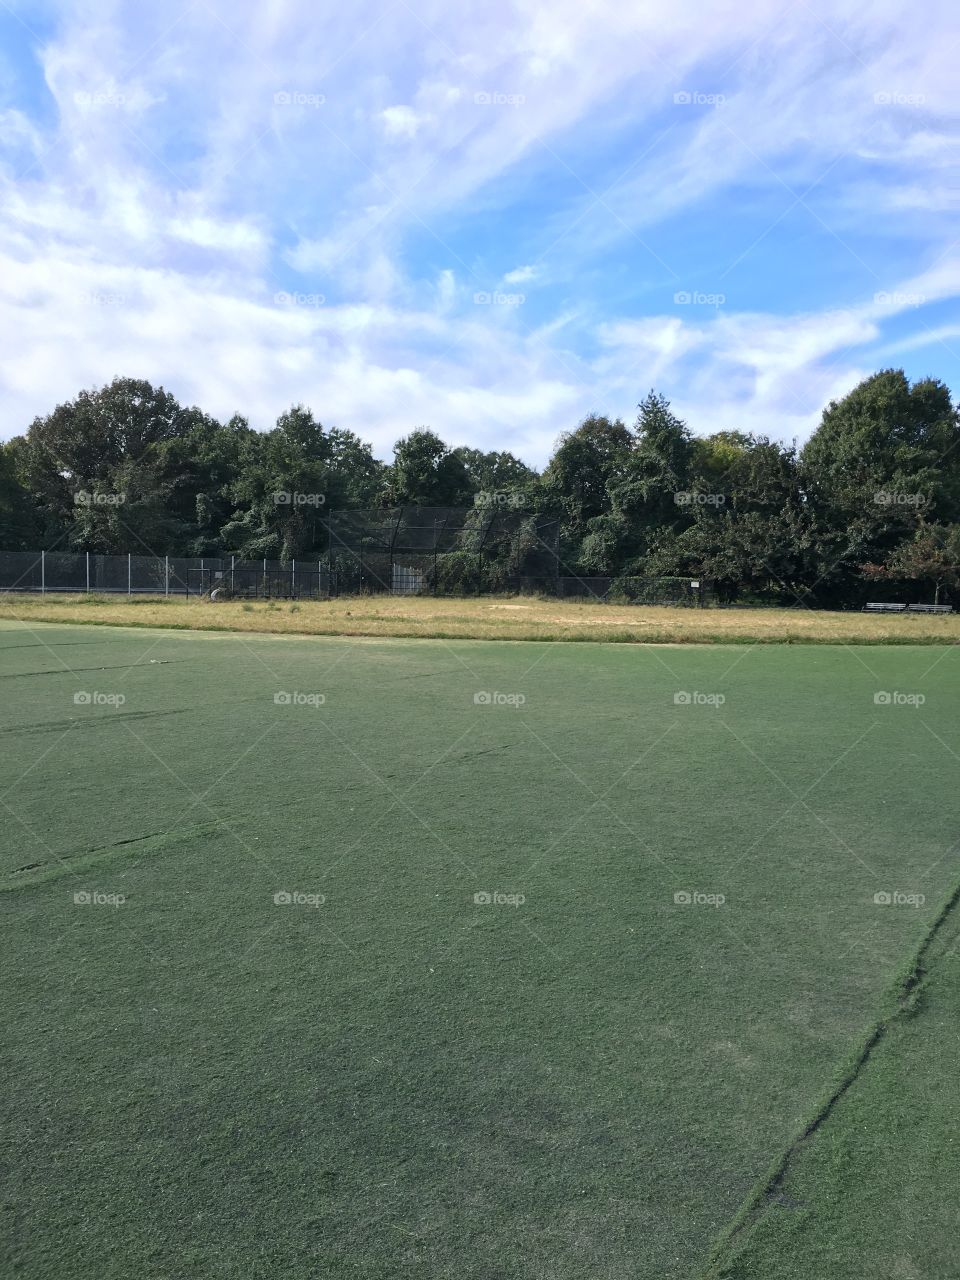 Baseball field in fall